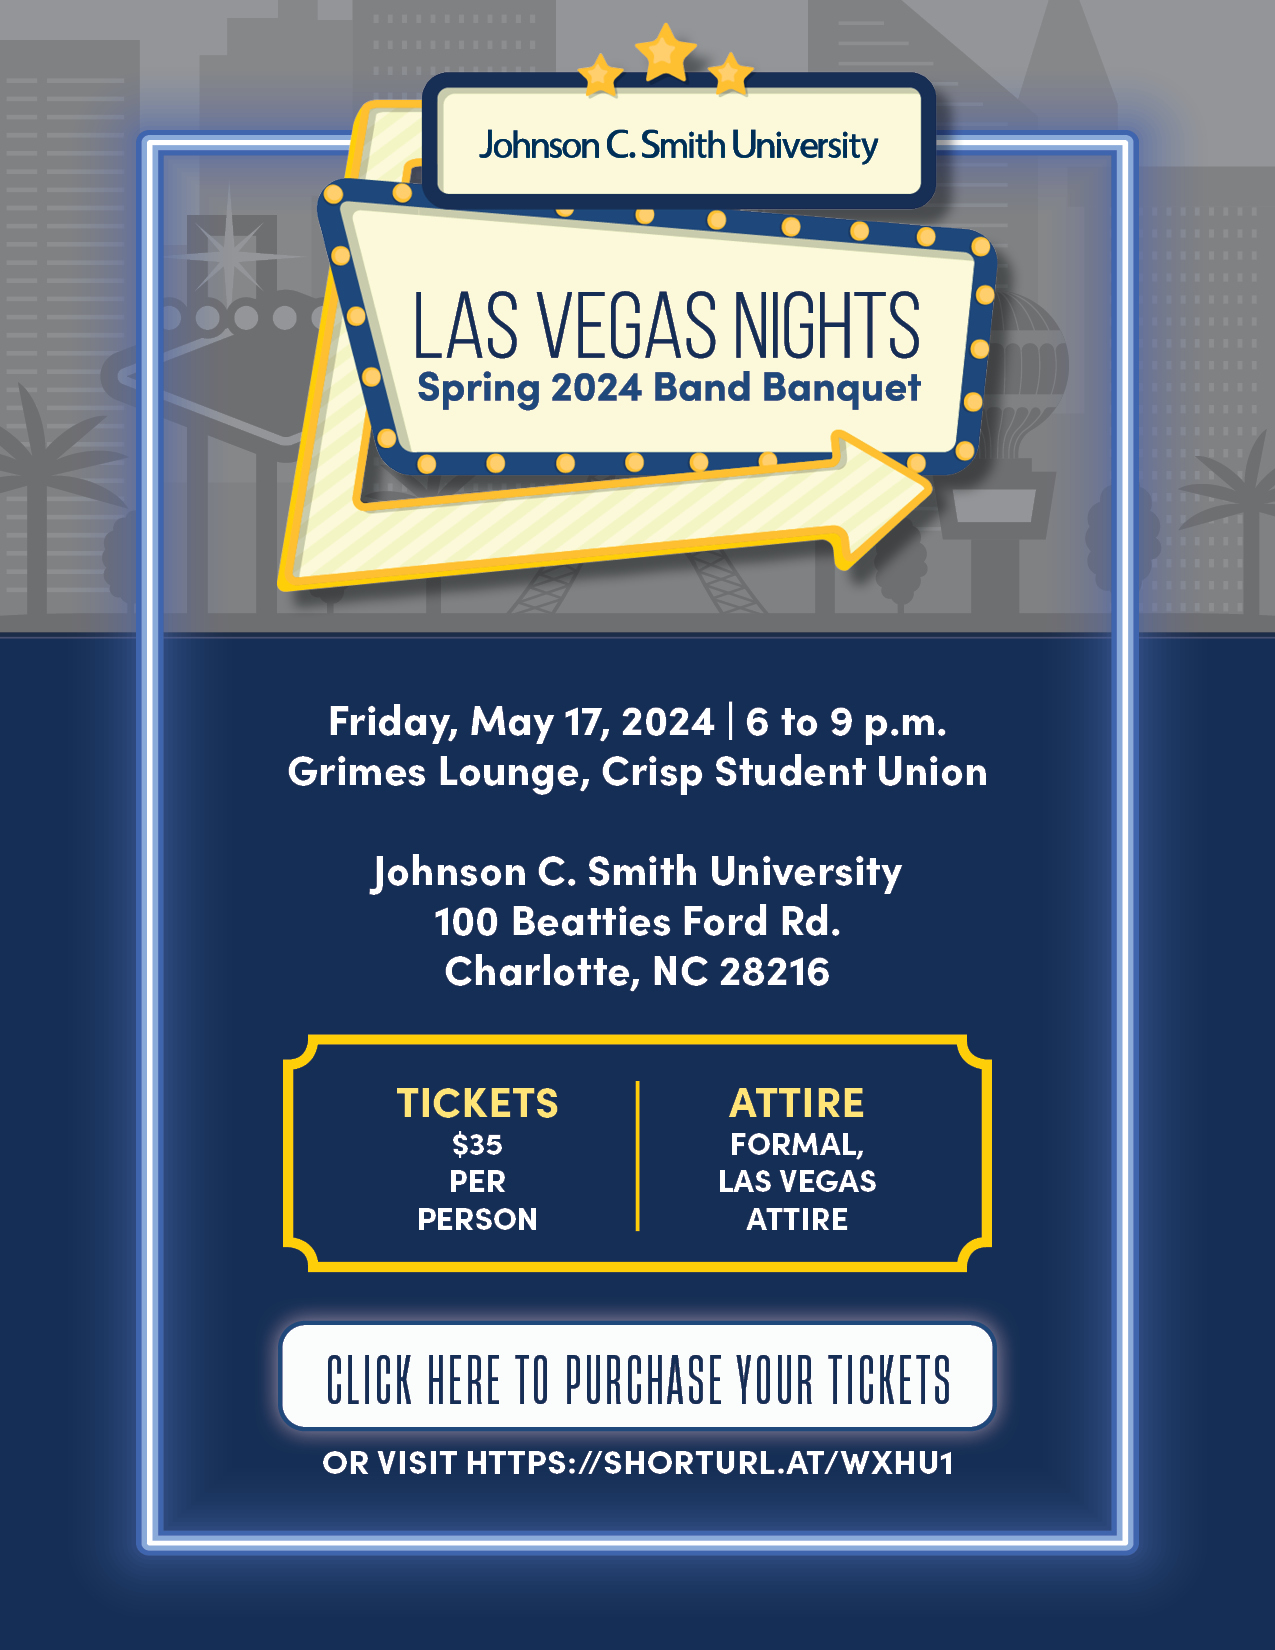 Las Vegas Nights Spring 2024 Band Banquet  Friday, May 17, 2024 6-9 p.m. Mary Joyce Taylor Crisp Student Union - Grimes Lounge  Tickets: $35 per person Attire: Formal, Las Vegas Attire